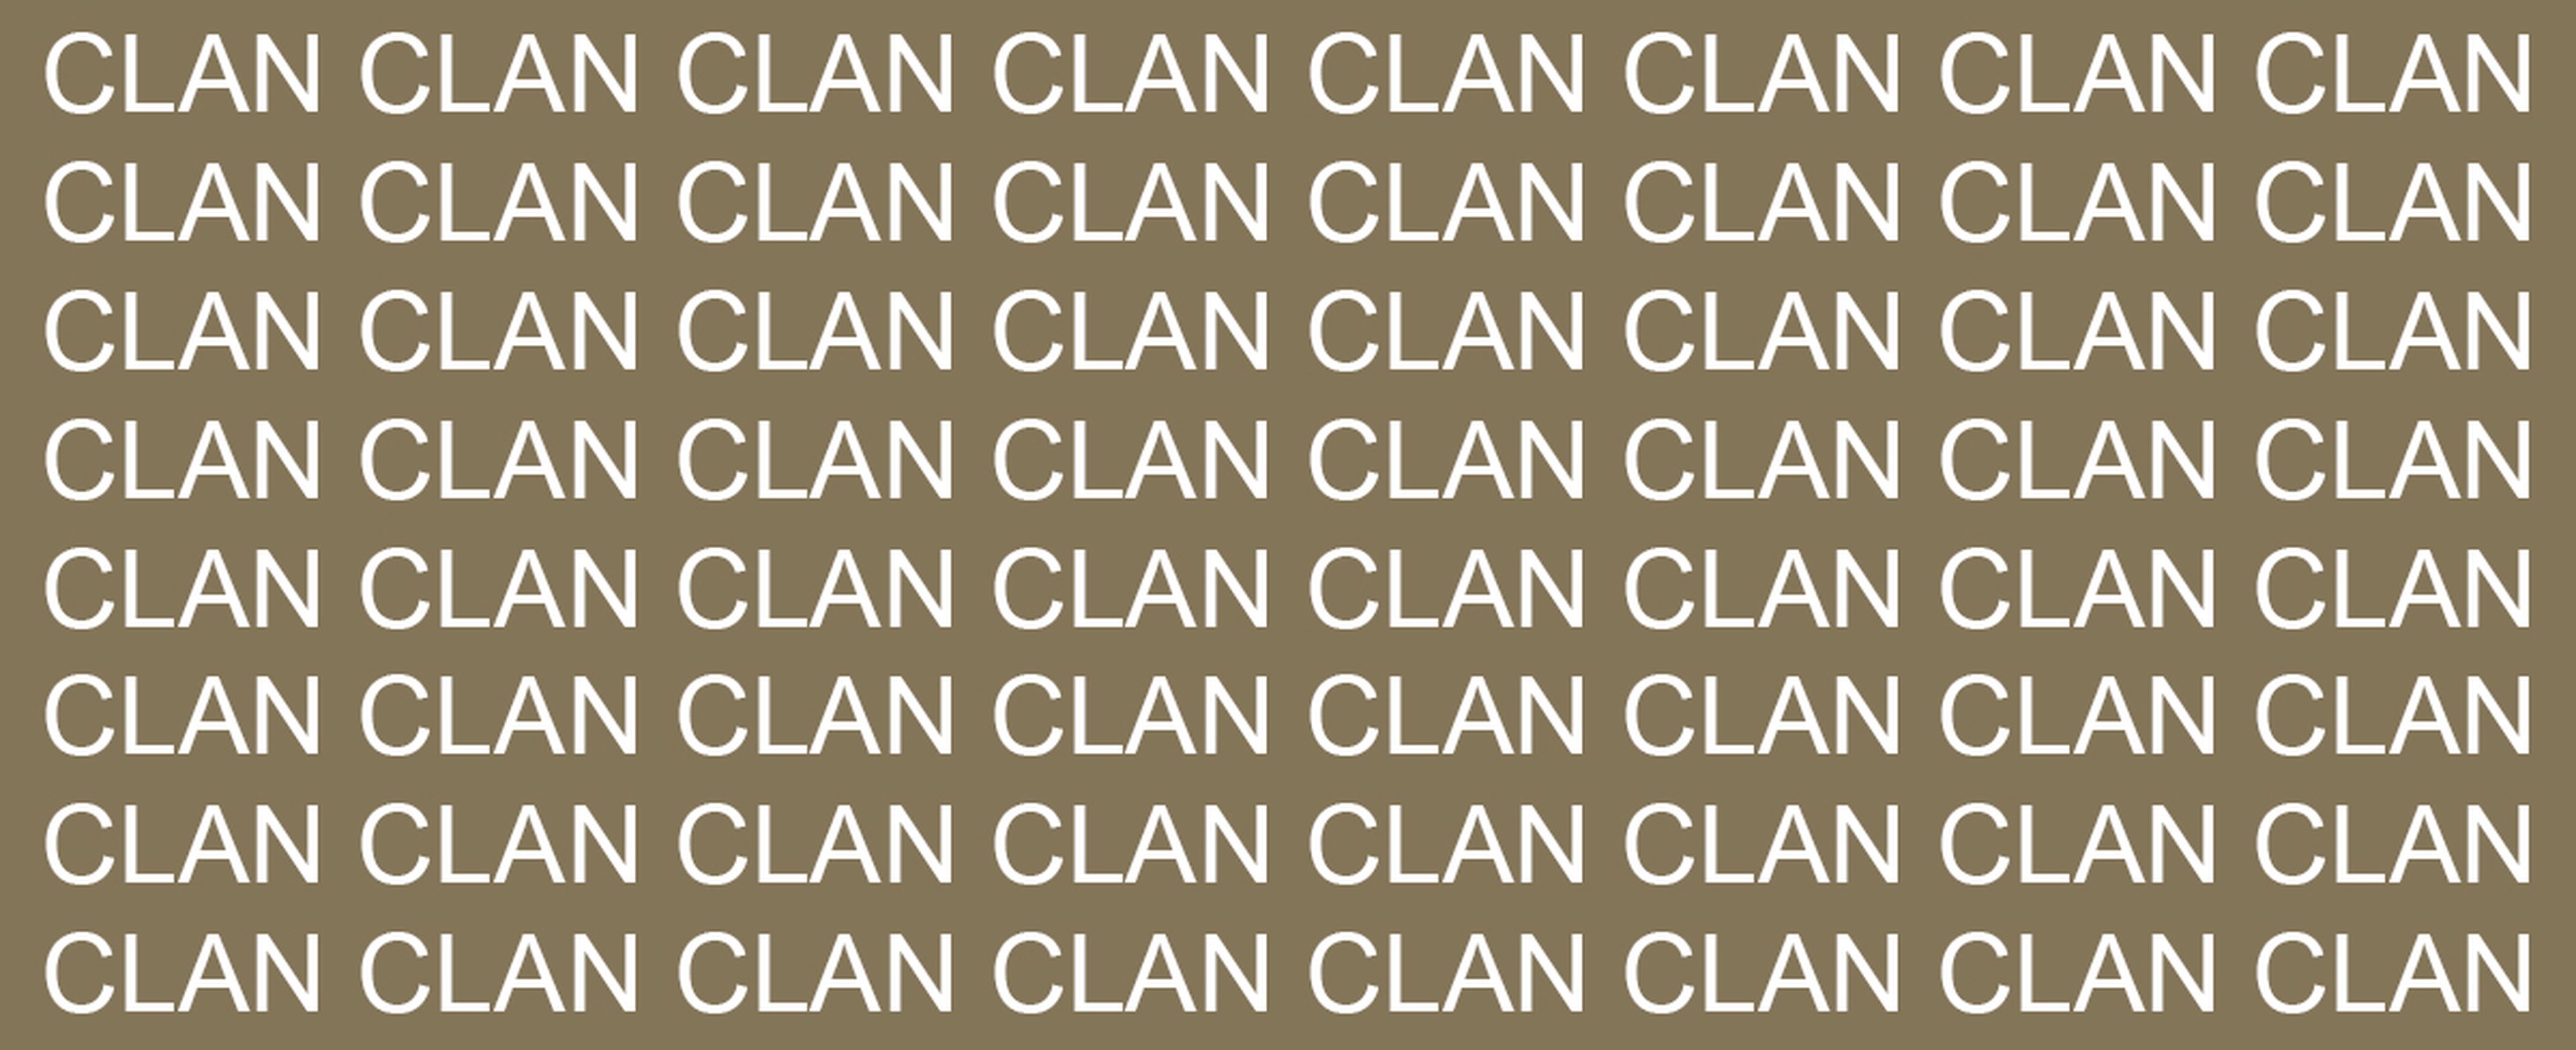 Reto visual encuentra la palabra clon